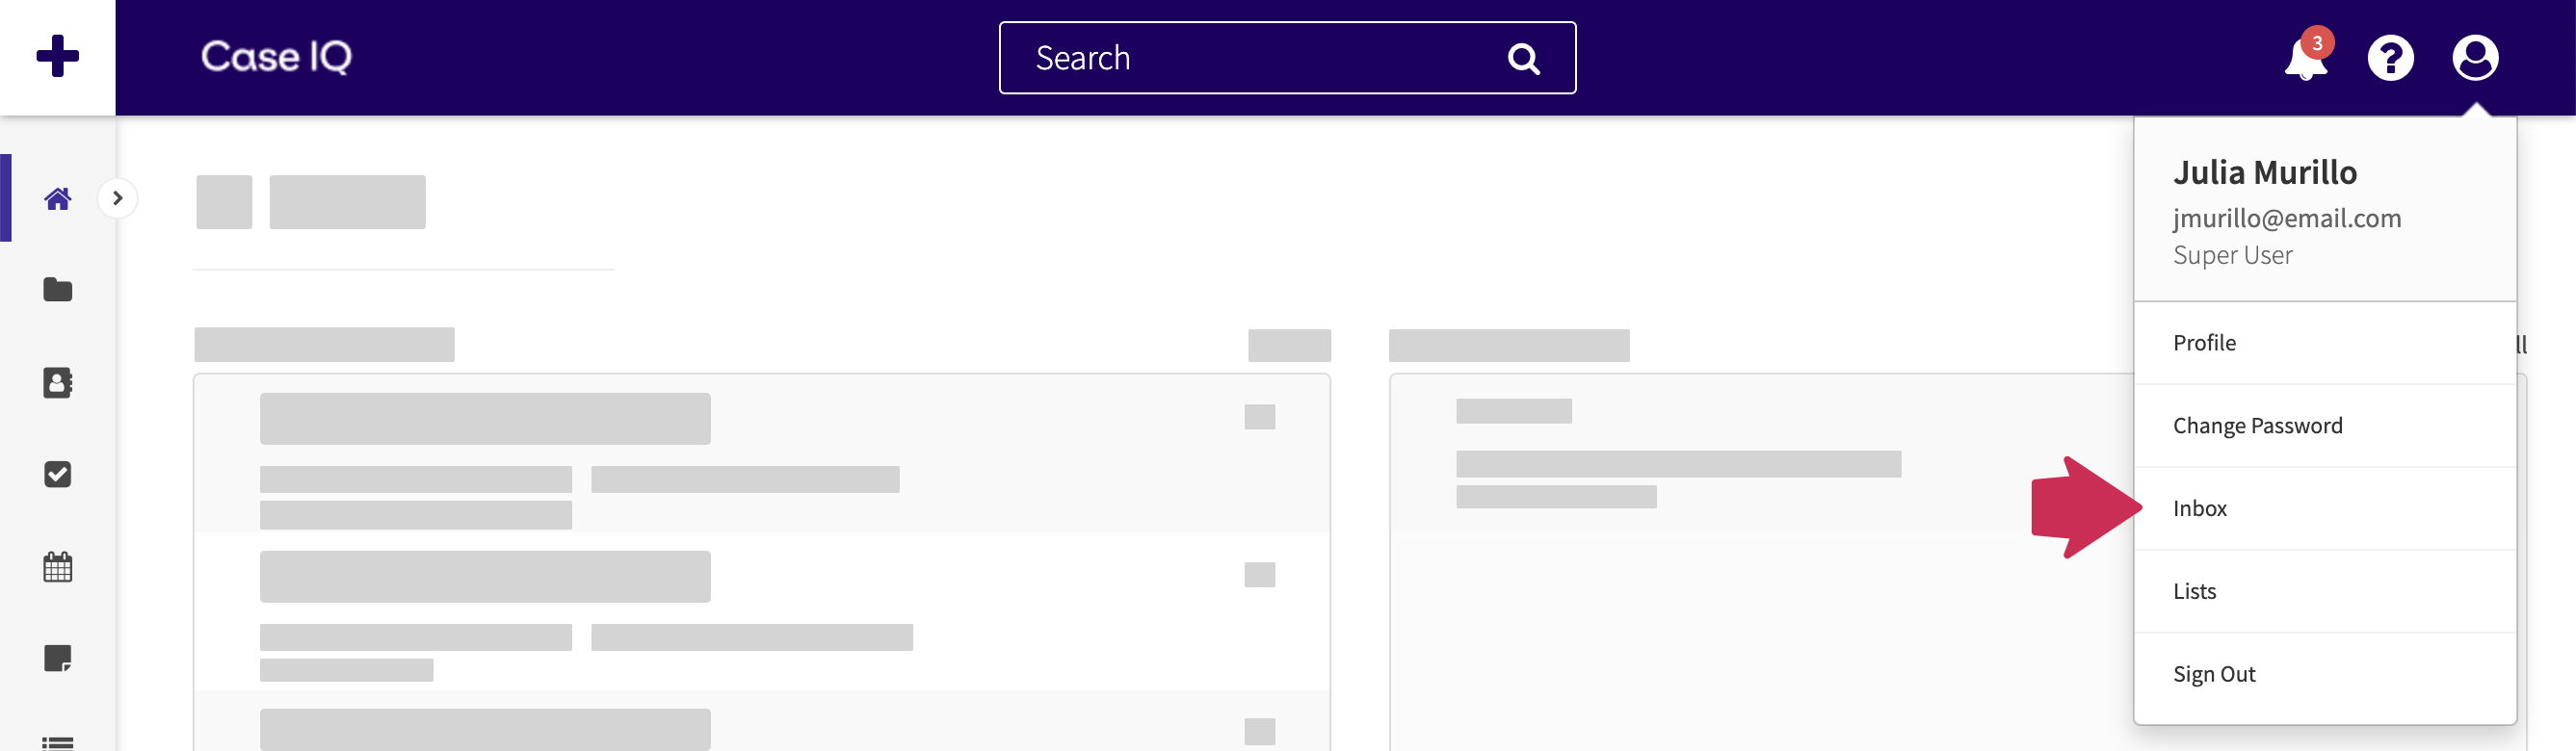 The open profile dropdown menu showing the Inbox option.